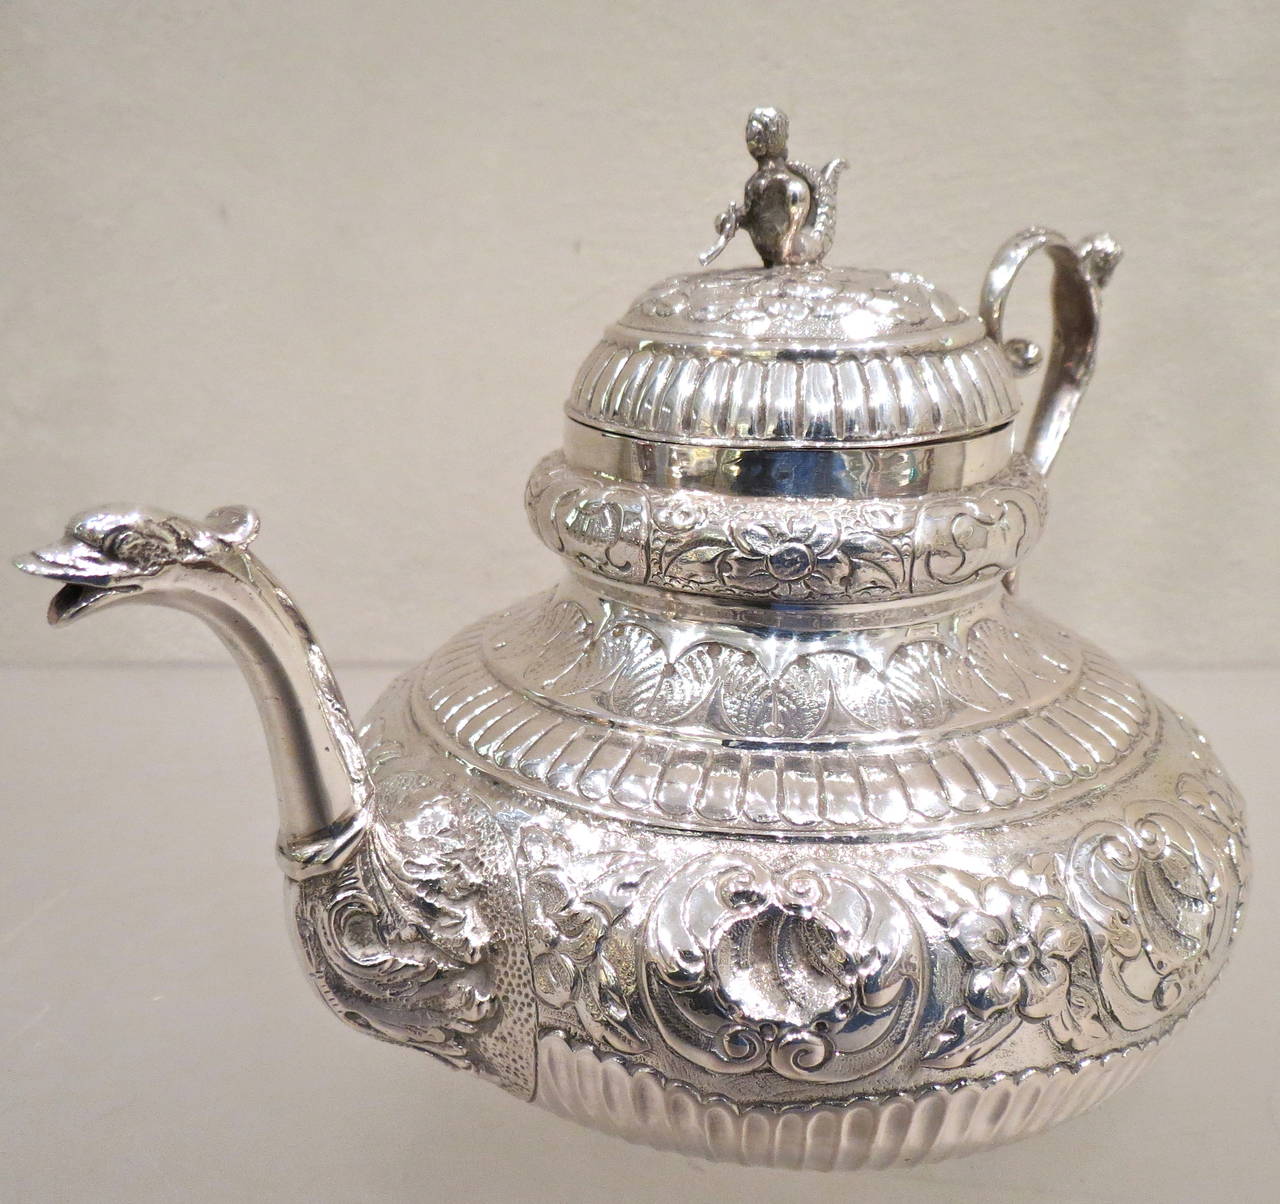 18th century teapot